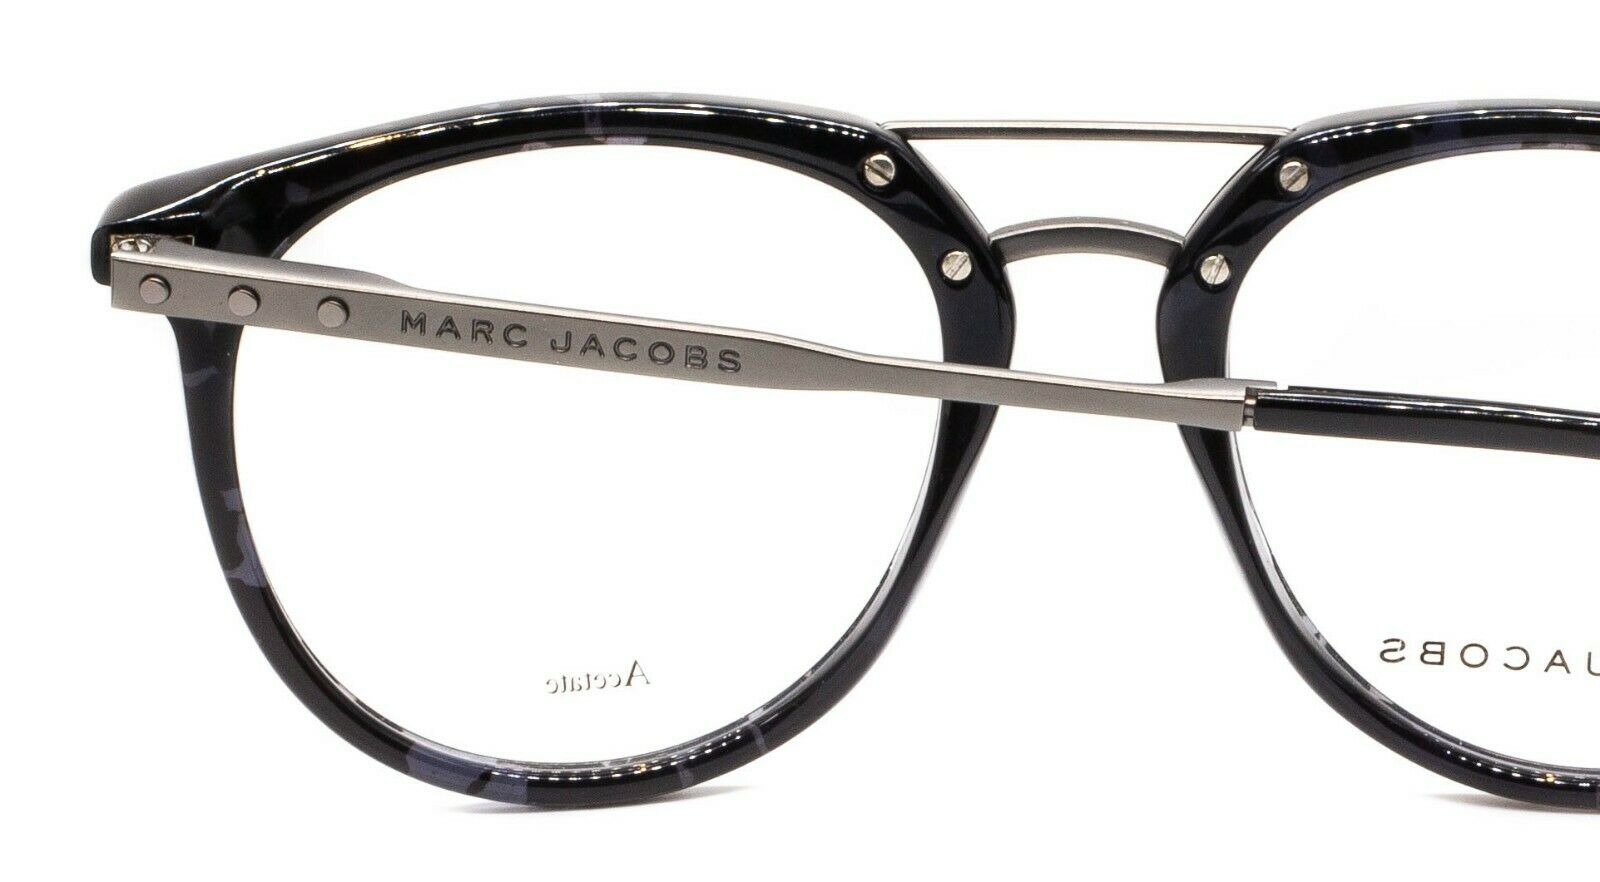 MARC BY MARC JACOBS MJ 603 5T4 50mm Eyewear FRAMES RX Optical Glasses Eyeglasses